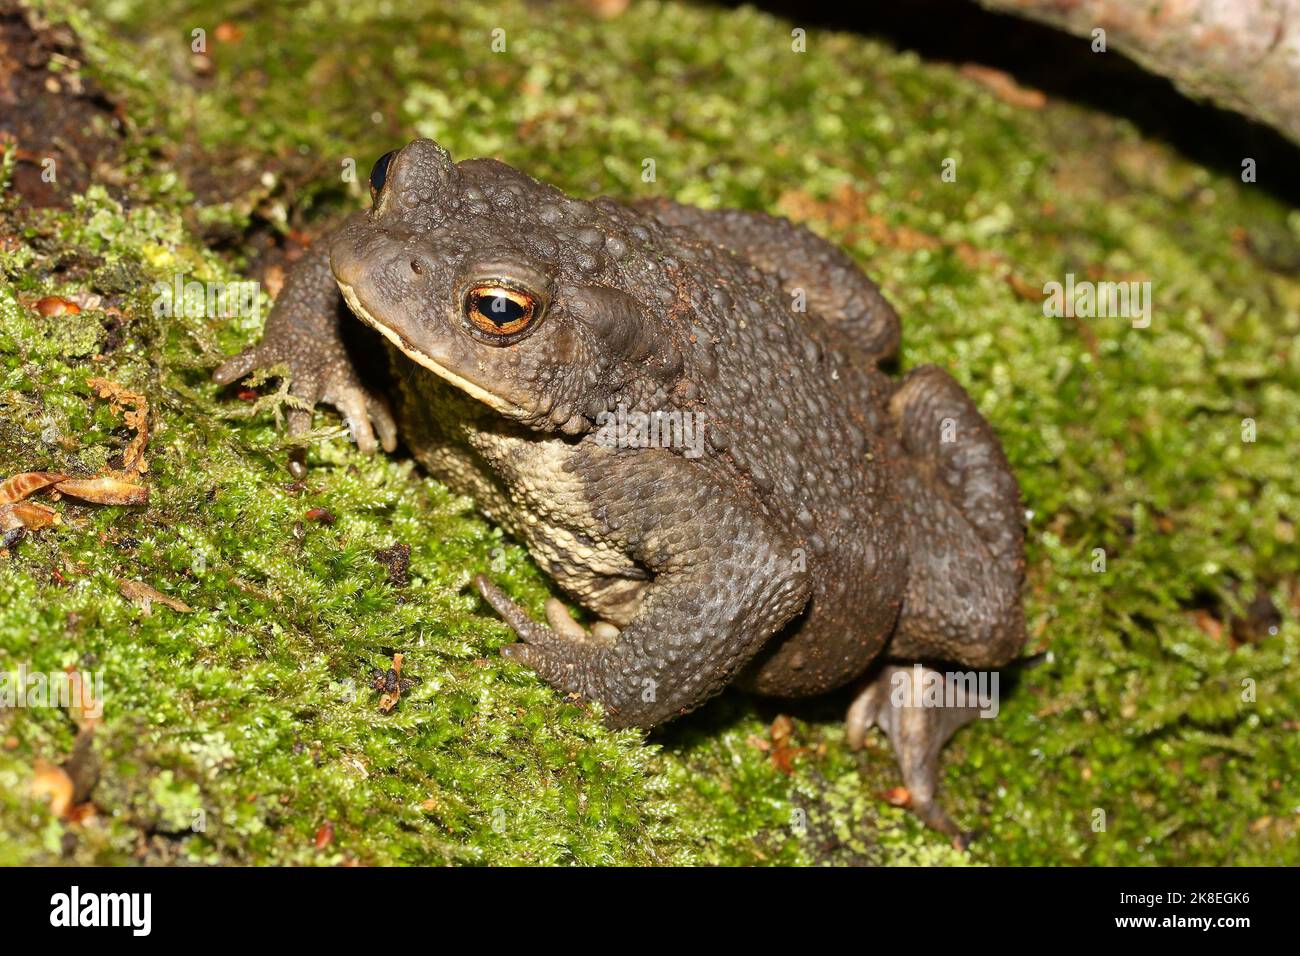 European common toad (Bufo bufo) in natural habitat Stock Photo